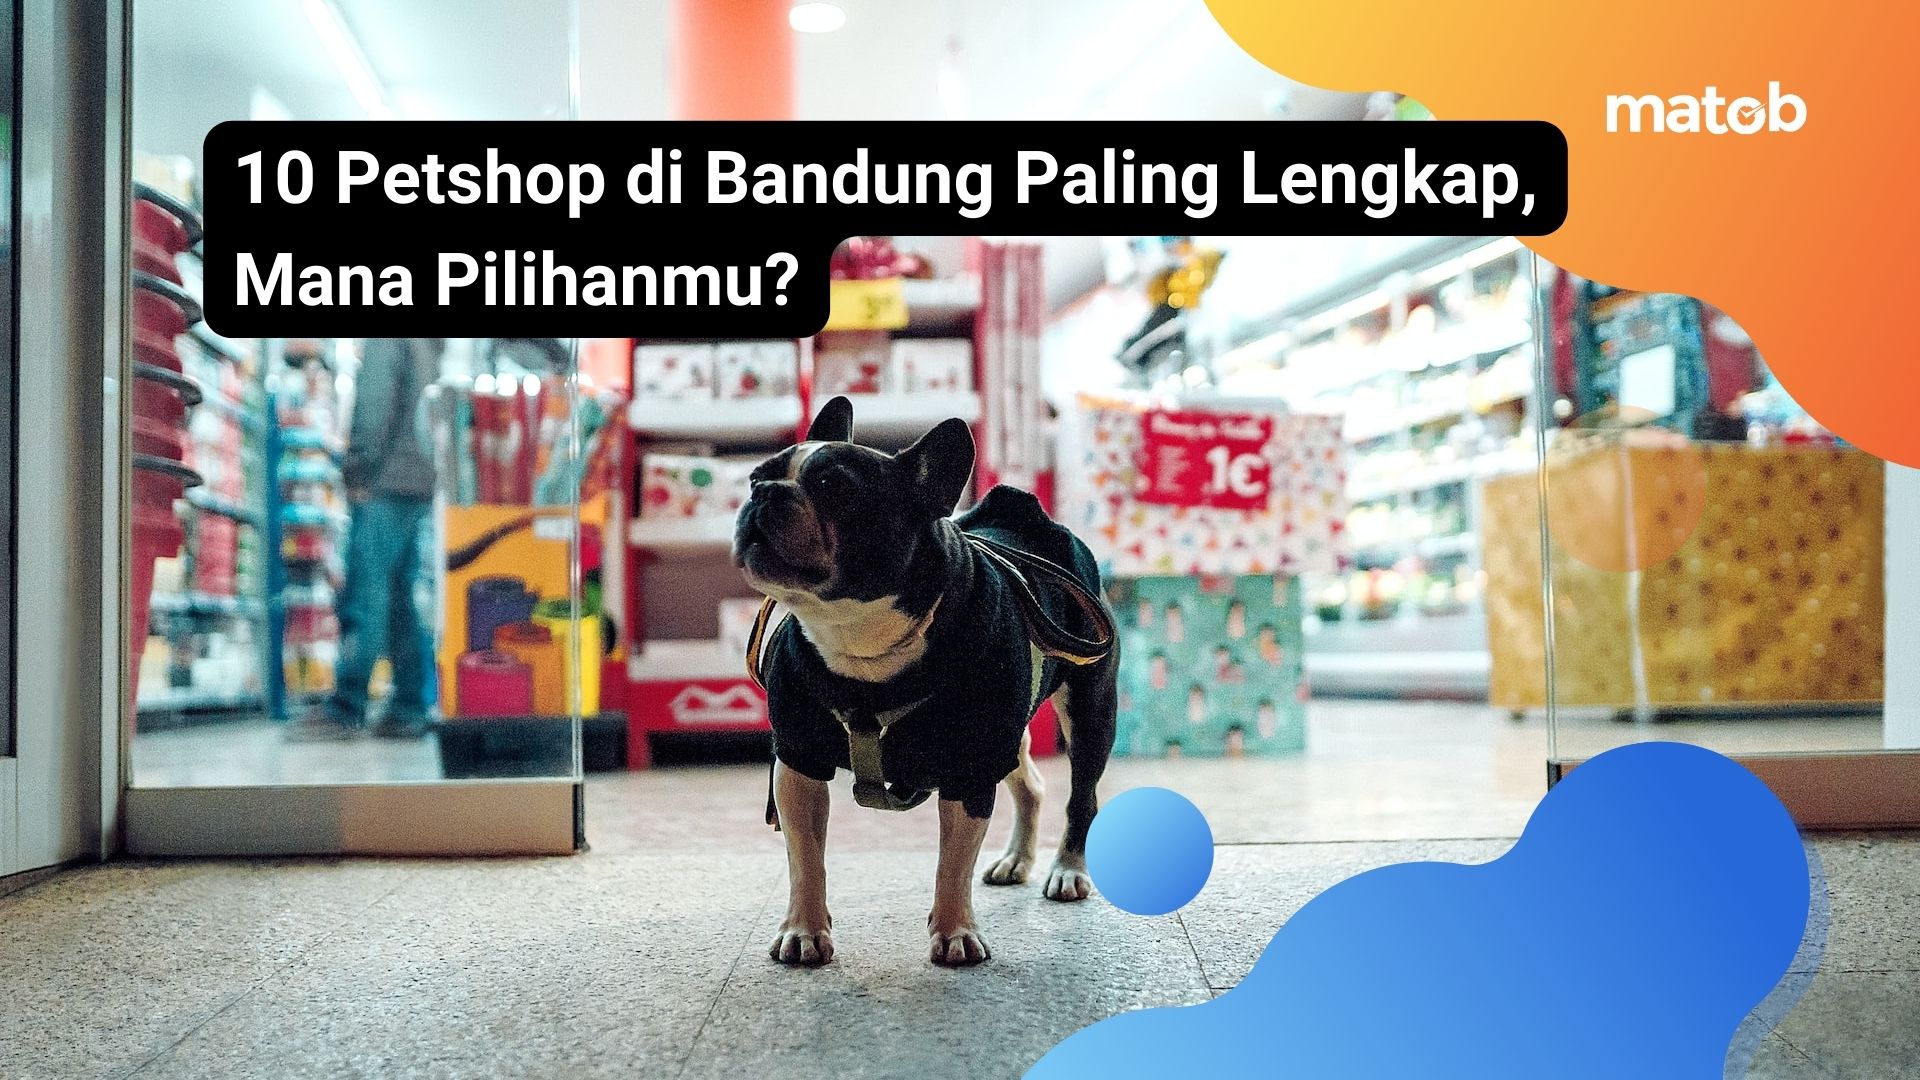 10 Petshop di Bandung Paling Lengkap, Mana Pilihanmu?